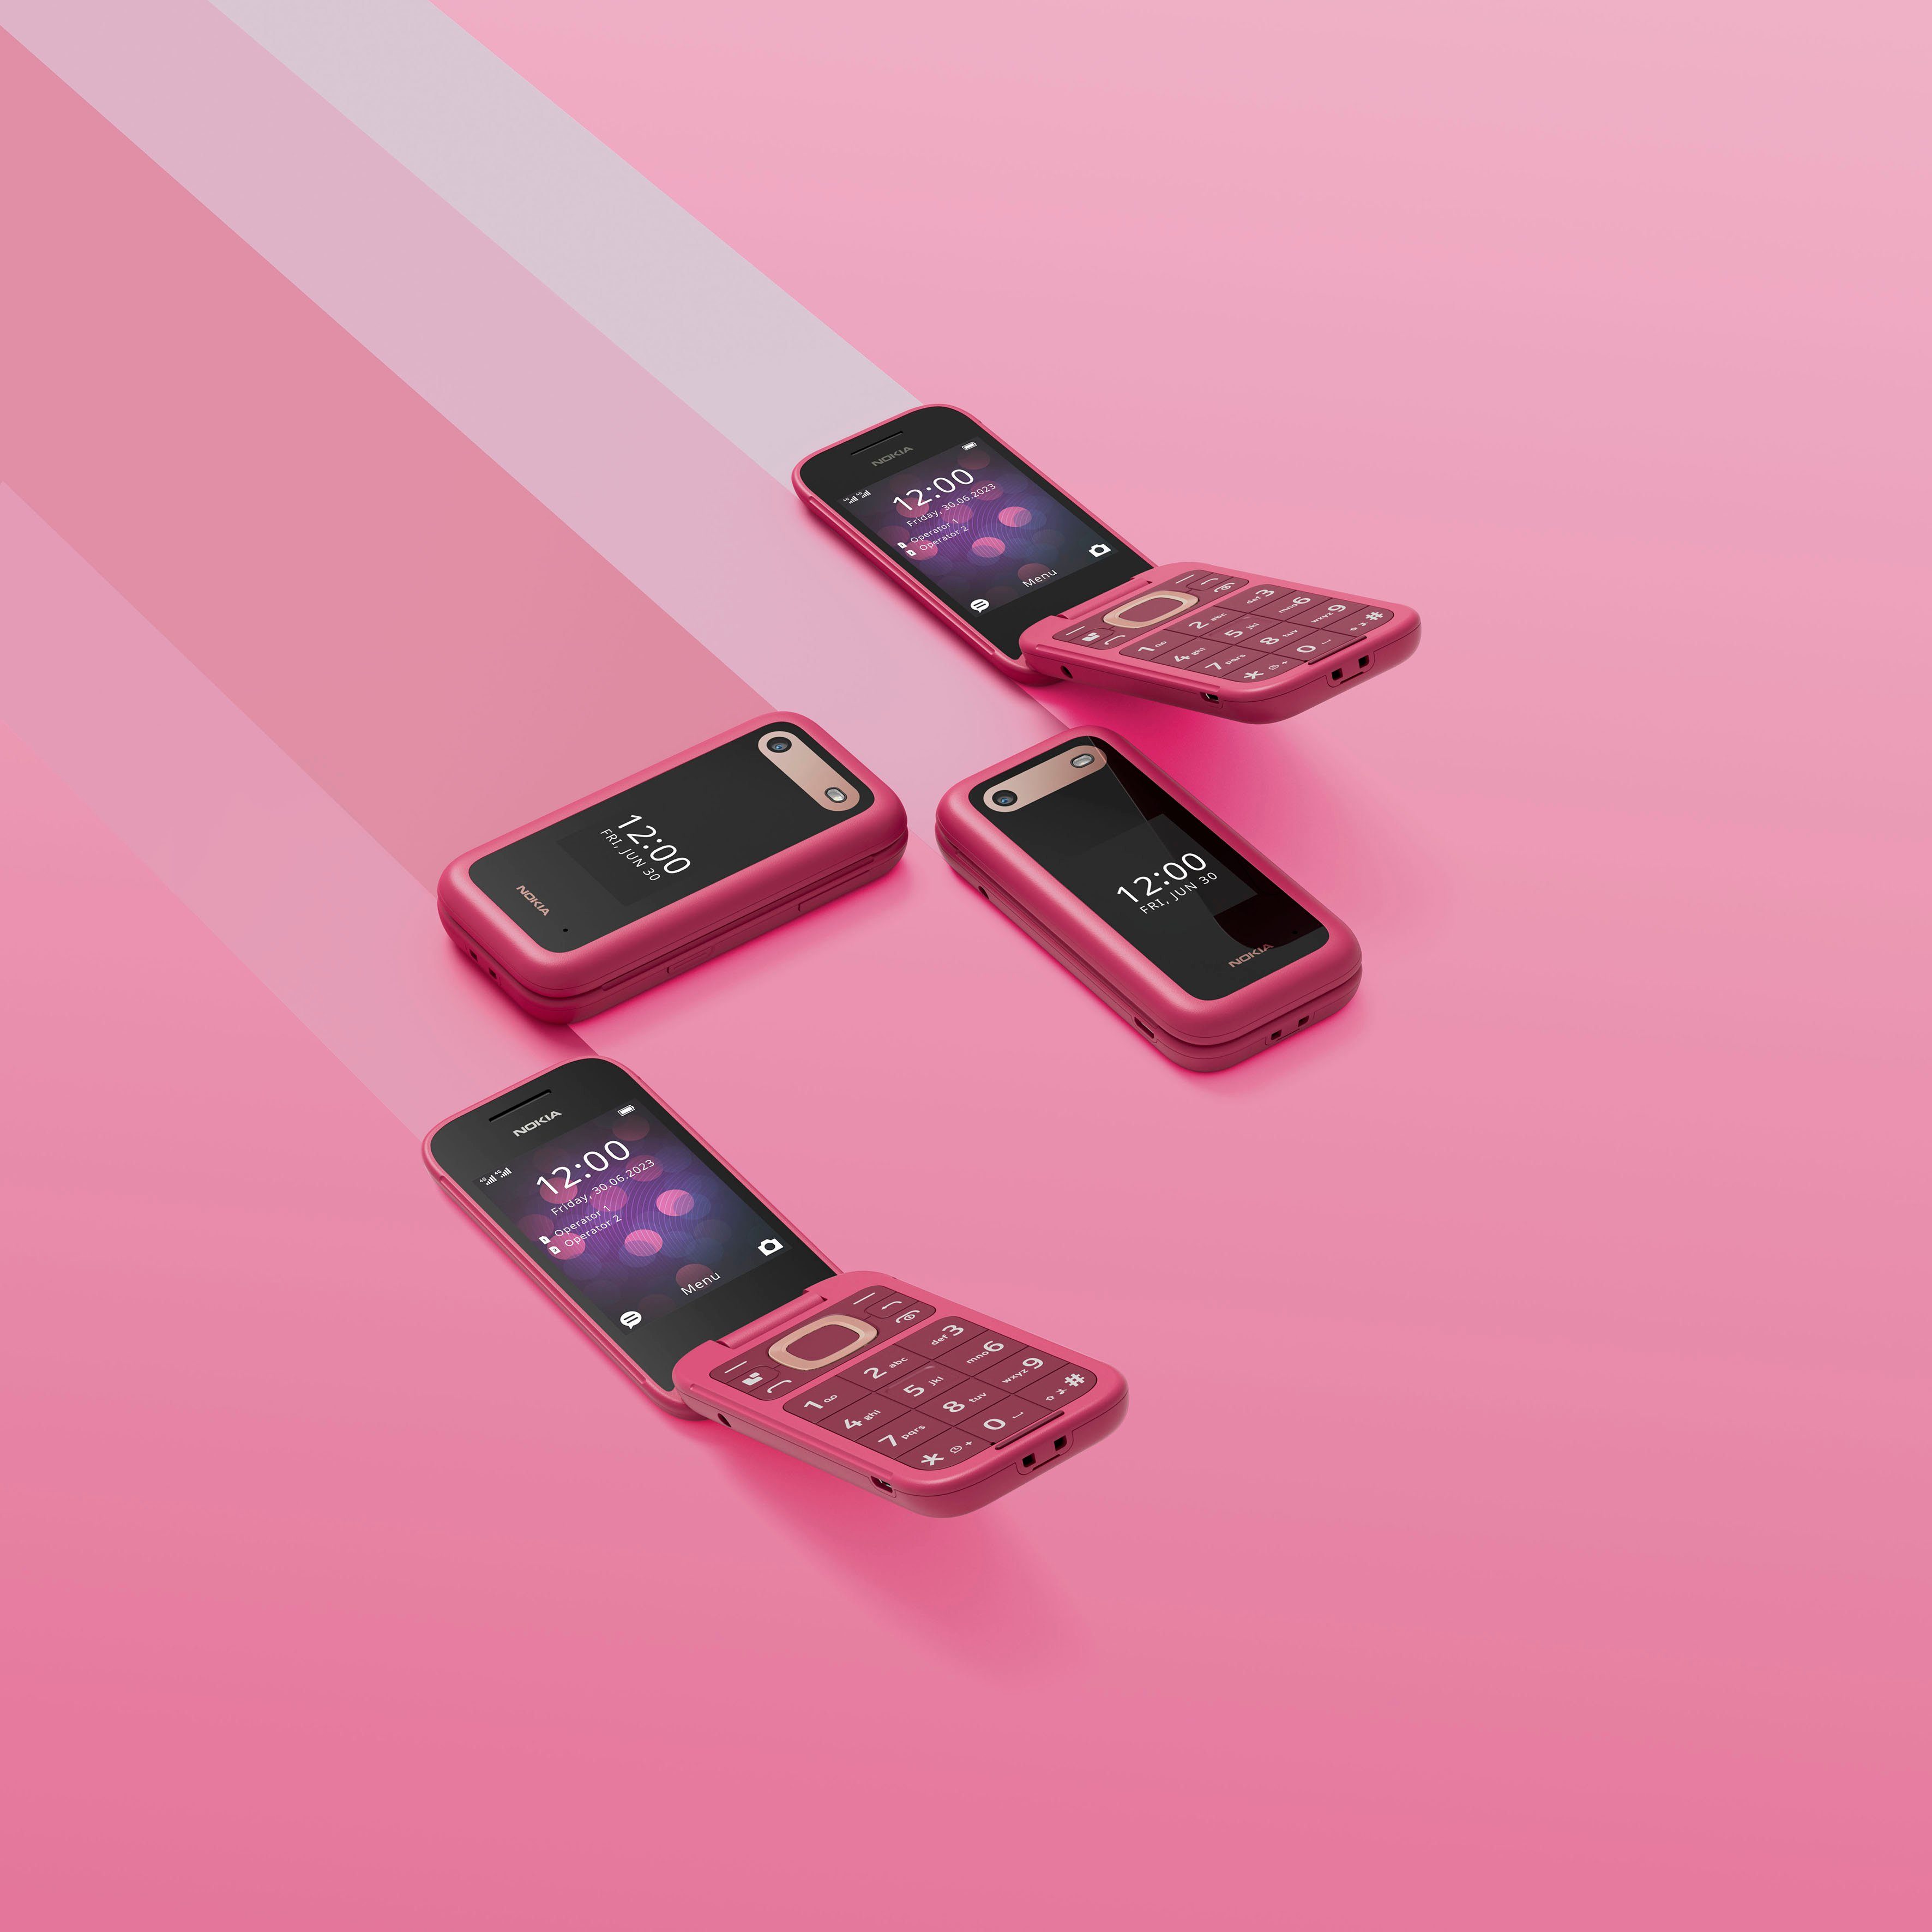 Nokia 2660 Flip Zoll, 0,13 MP (7,11 GB rosa Speicherplatz, 0,3 cm/2,8 Kamera) Klapphandy